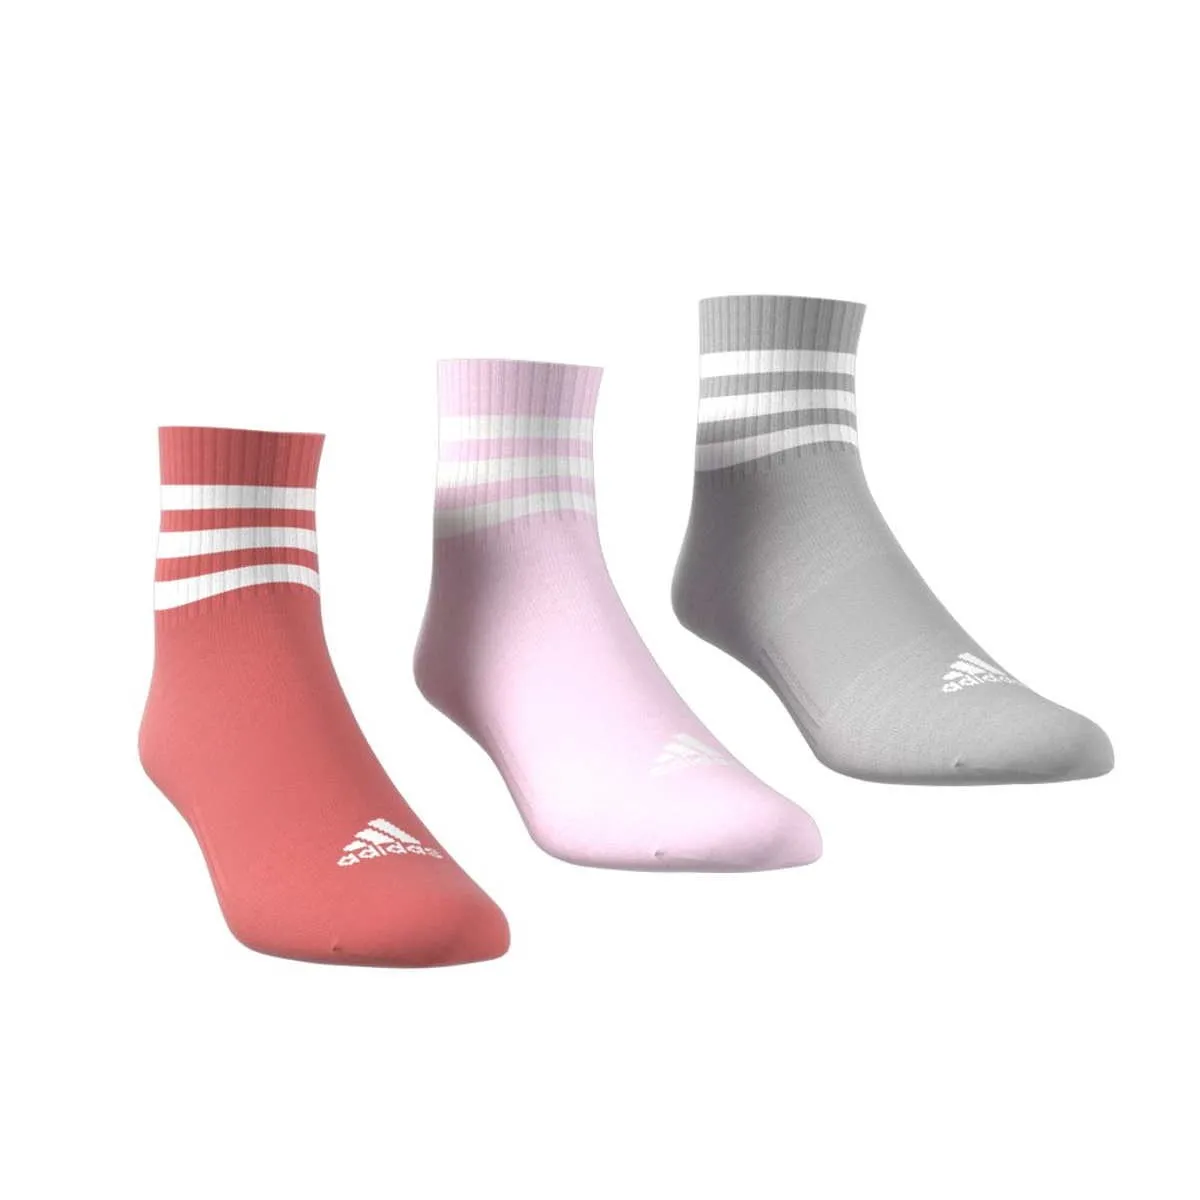 adidas Socks 3-Stripes Cushioned Crew Socks 3 Pack